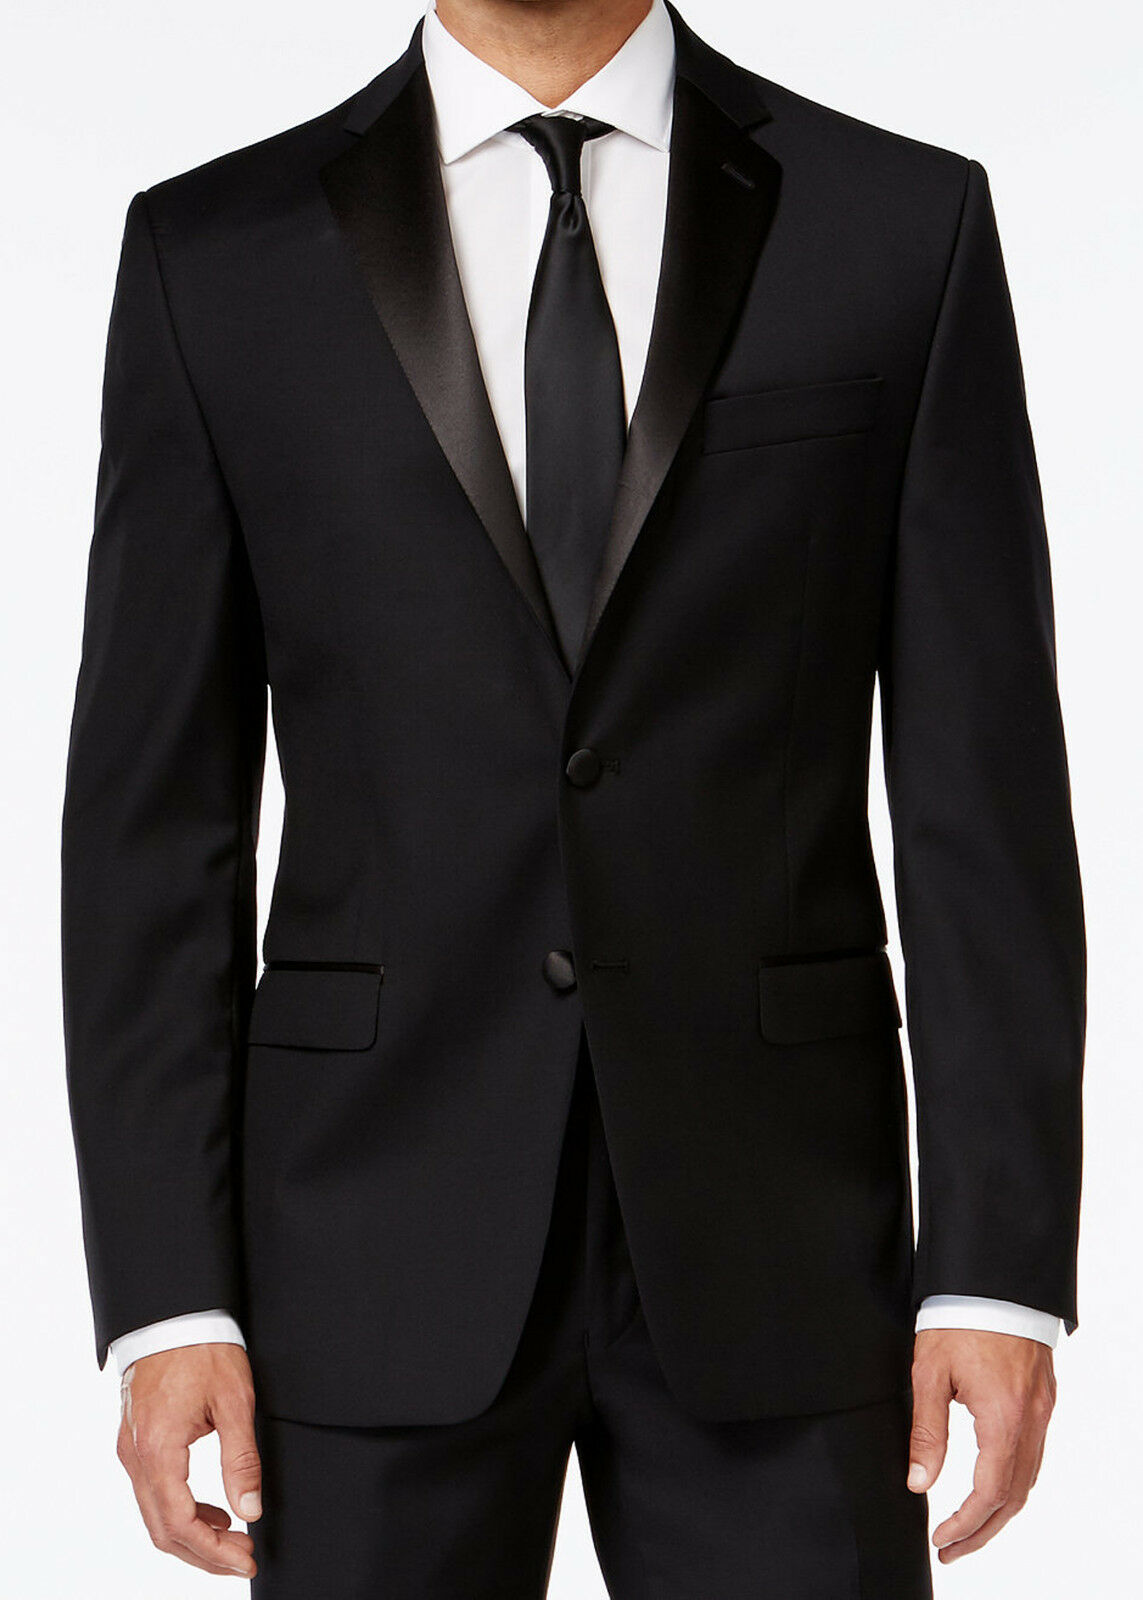 Men's Black Calvin Klein Tuxedo With Flat Front Pants Formal Wedding Mason Prom